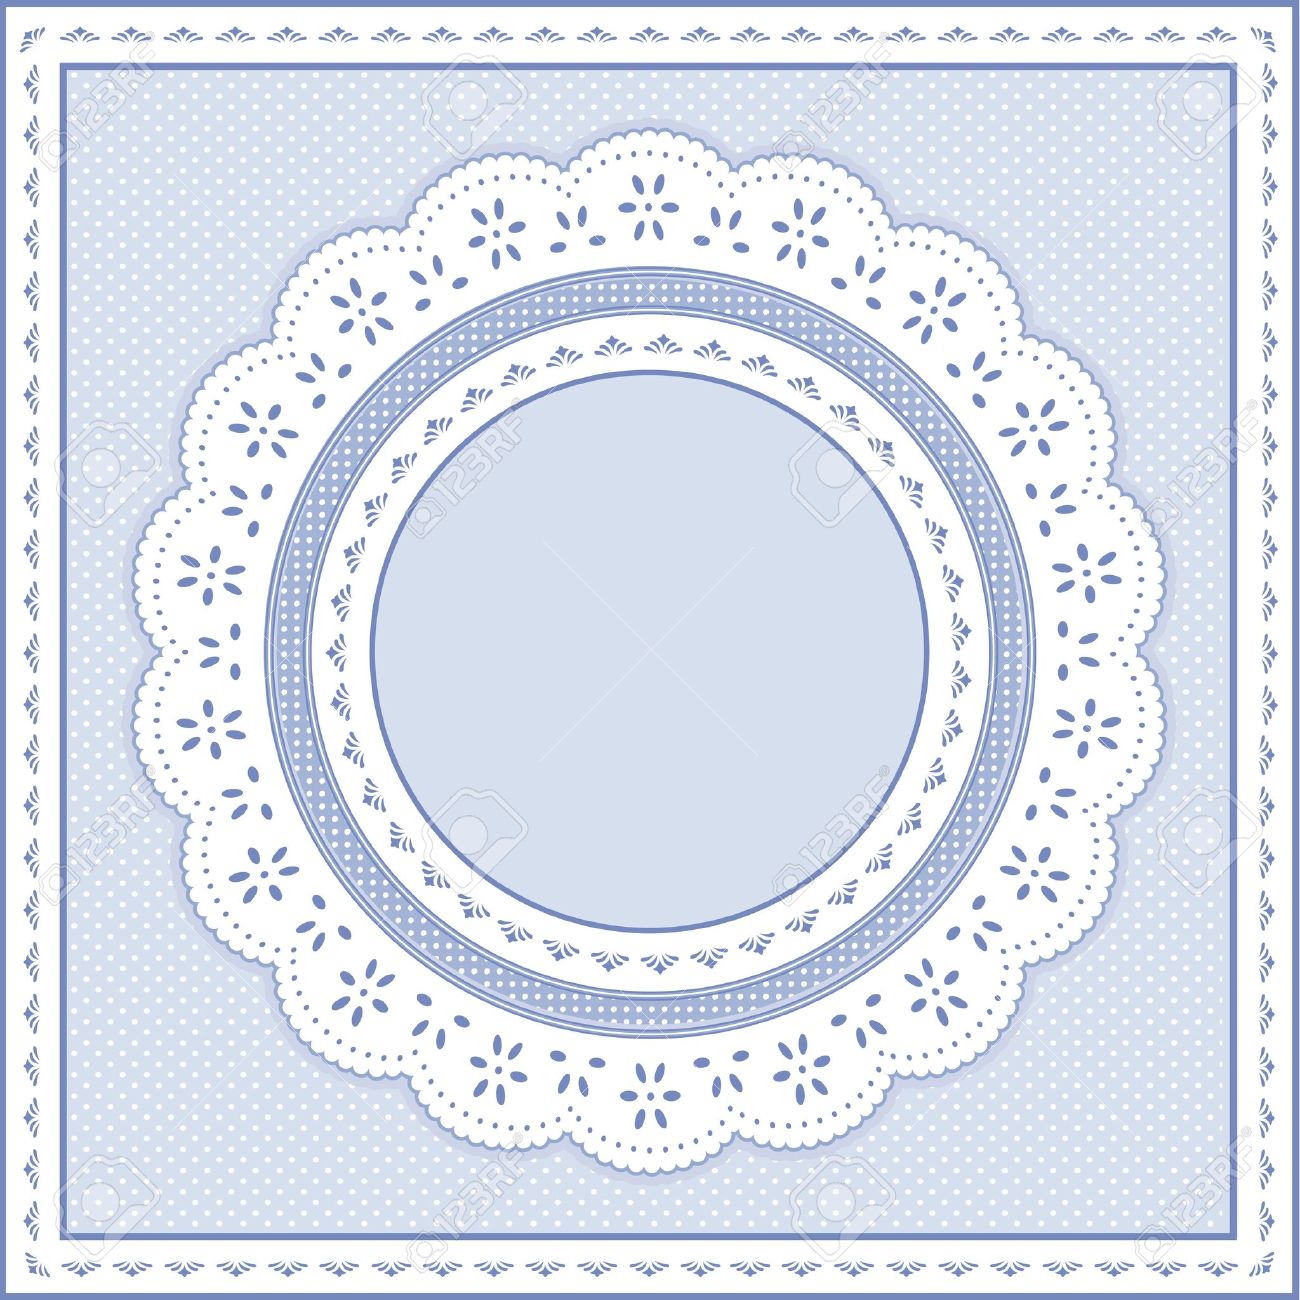 Eyelet Lace Doily Round Picture Frame On Pastel Blue Polka Dot